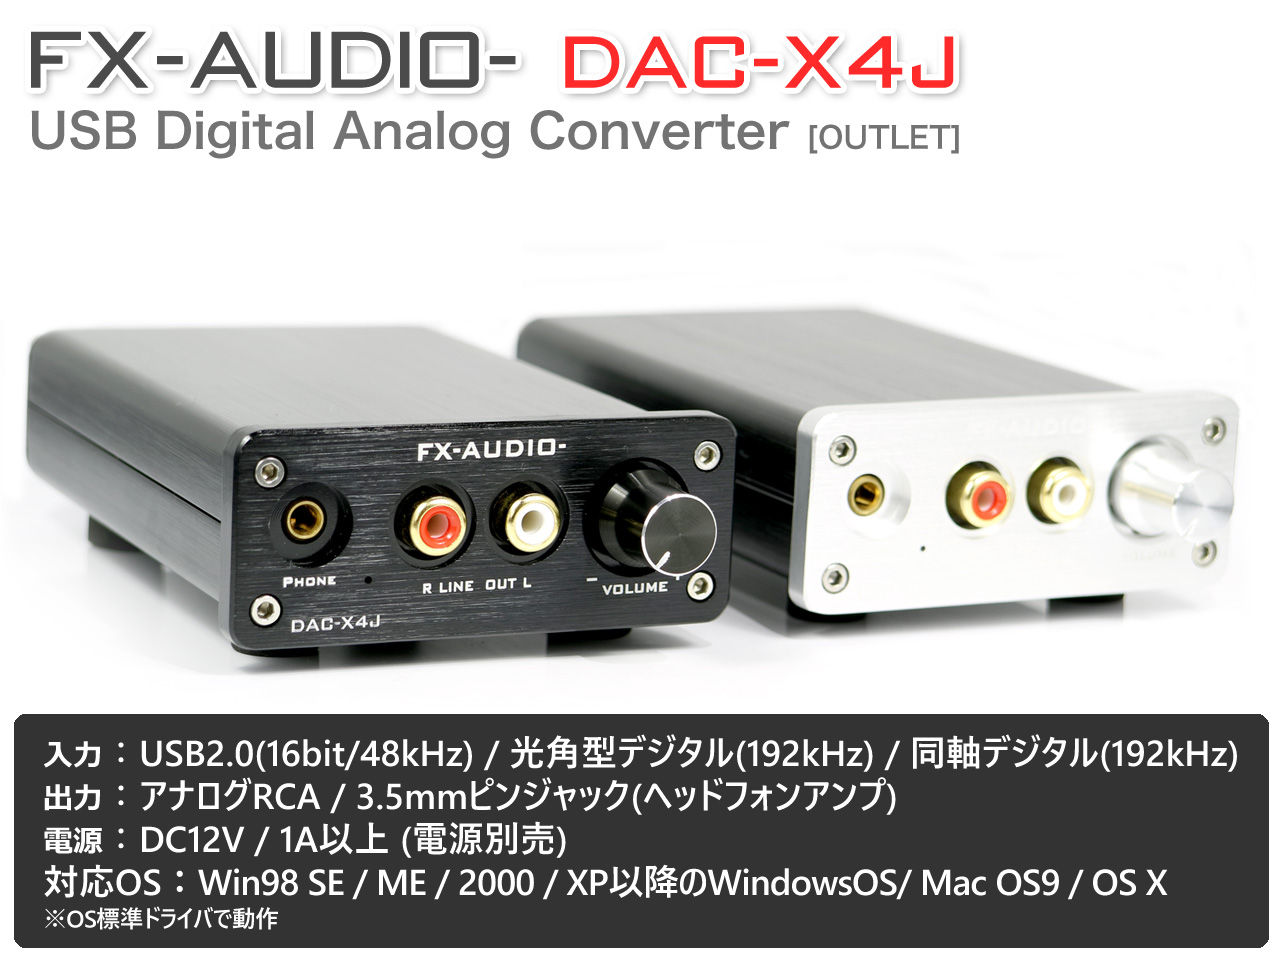 NorthFlatJapan 公式ブログ : 新商品販売のご案内『FX-AUDIO- DAC-X4J』